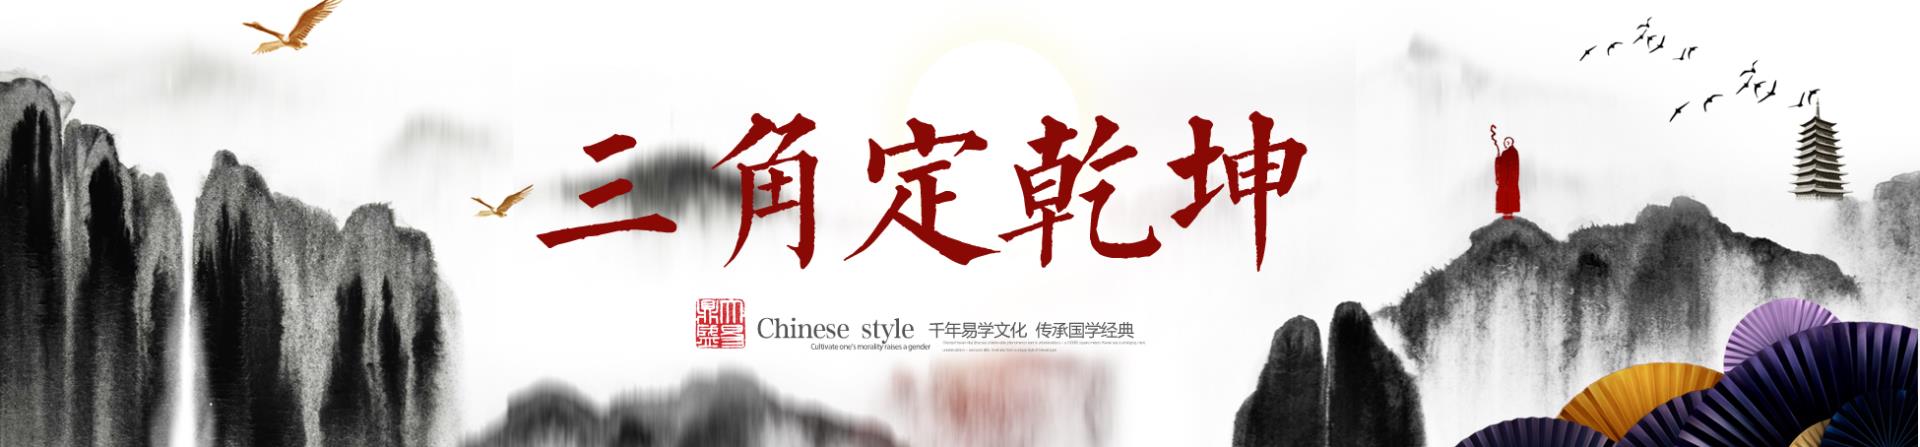 大易文化-banner